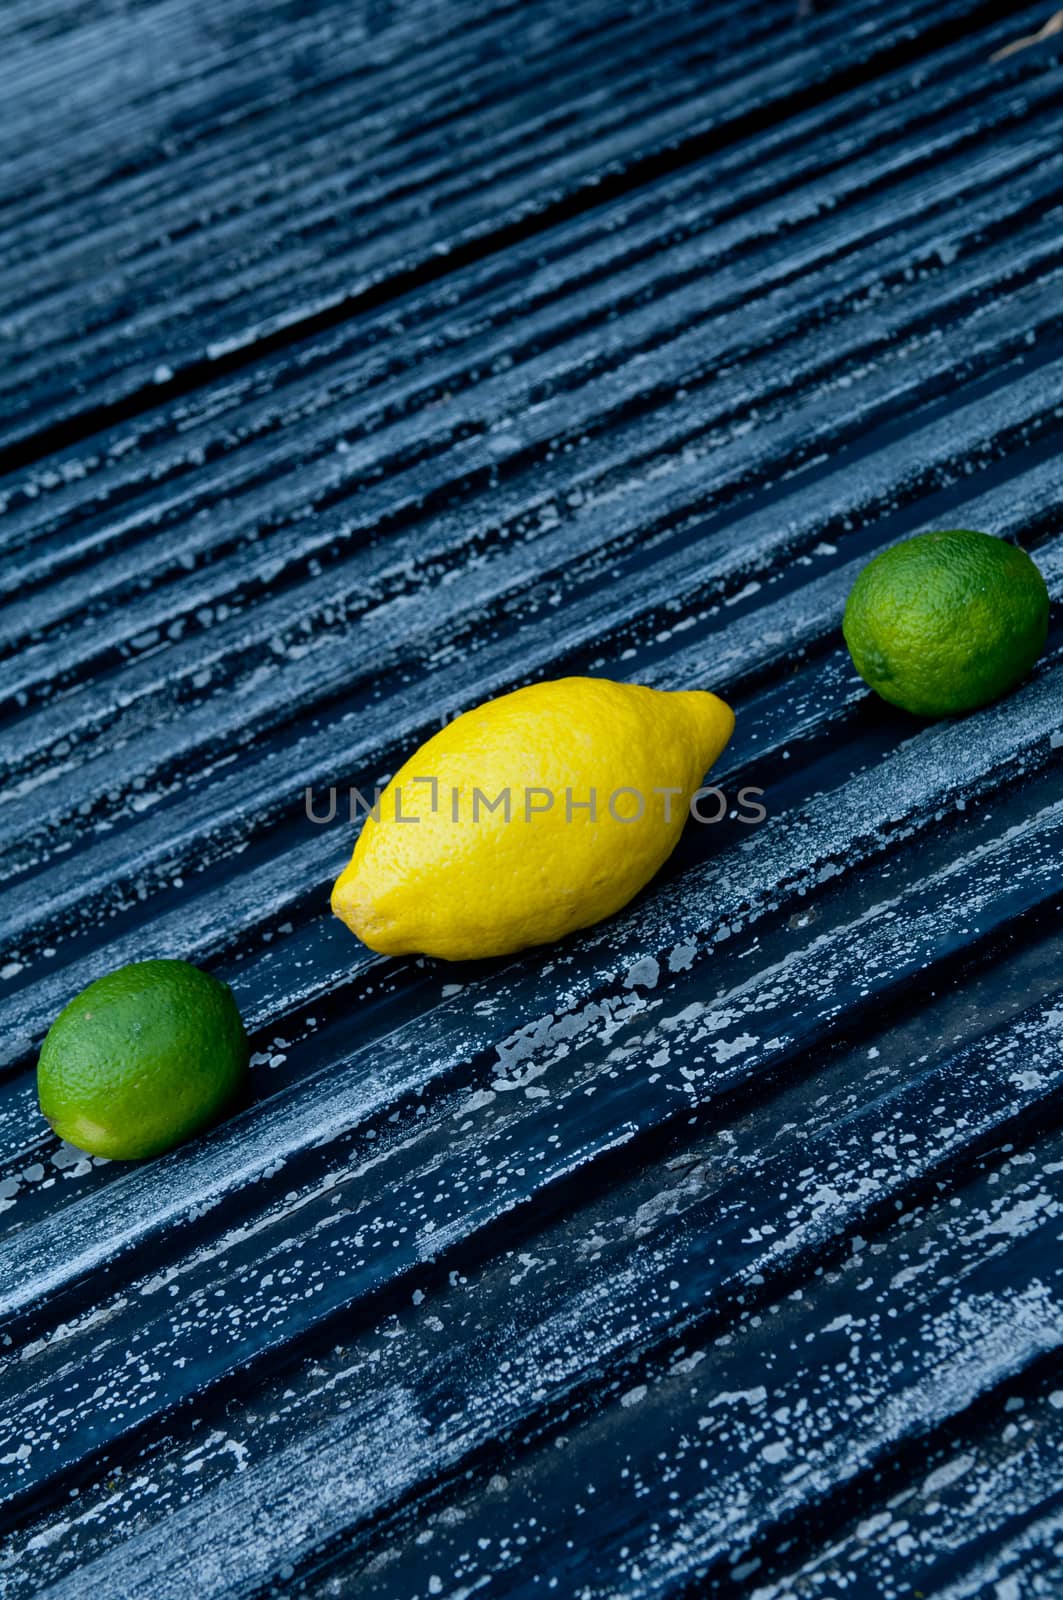 Lemon and lime arrangement on old black textured metal surface